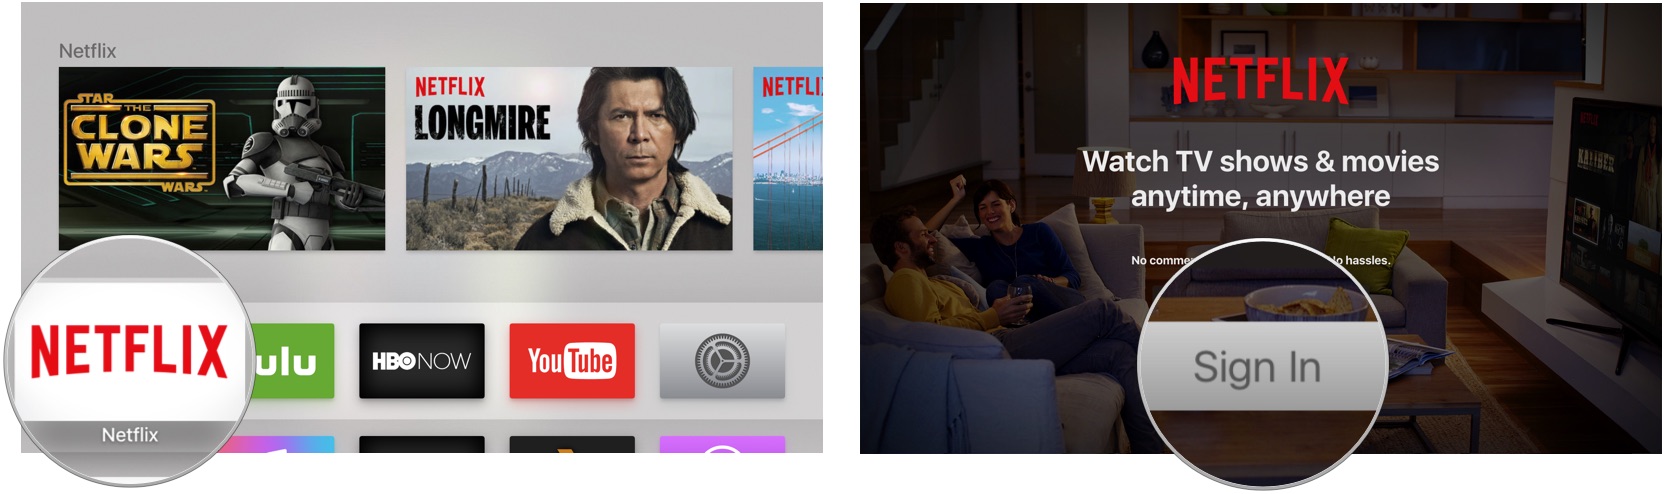 Signing into Netflix on Apple TV